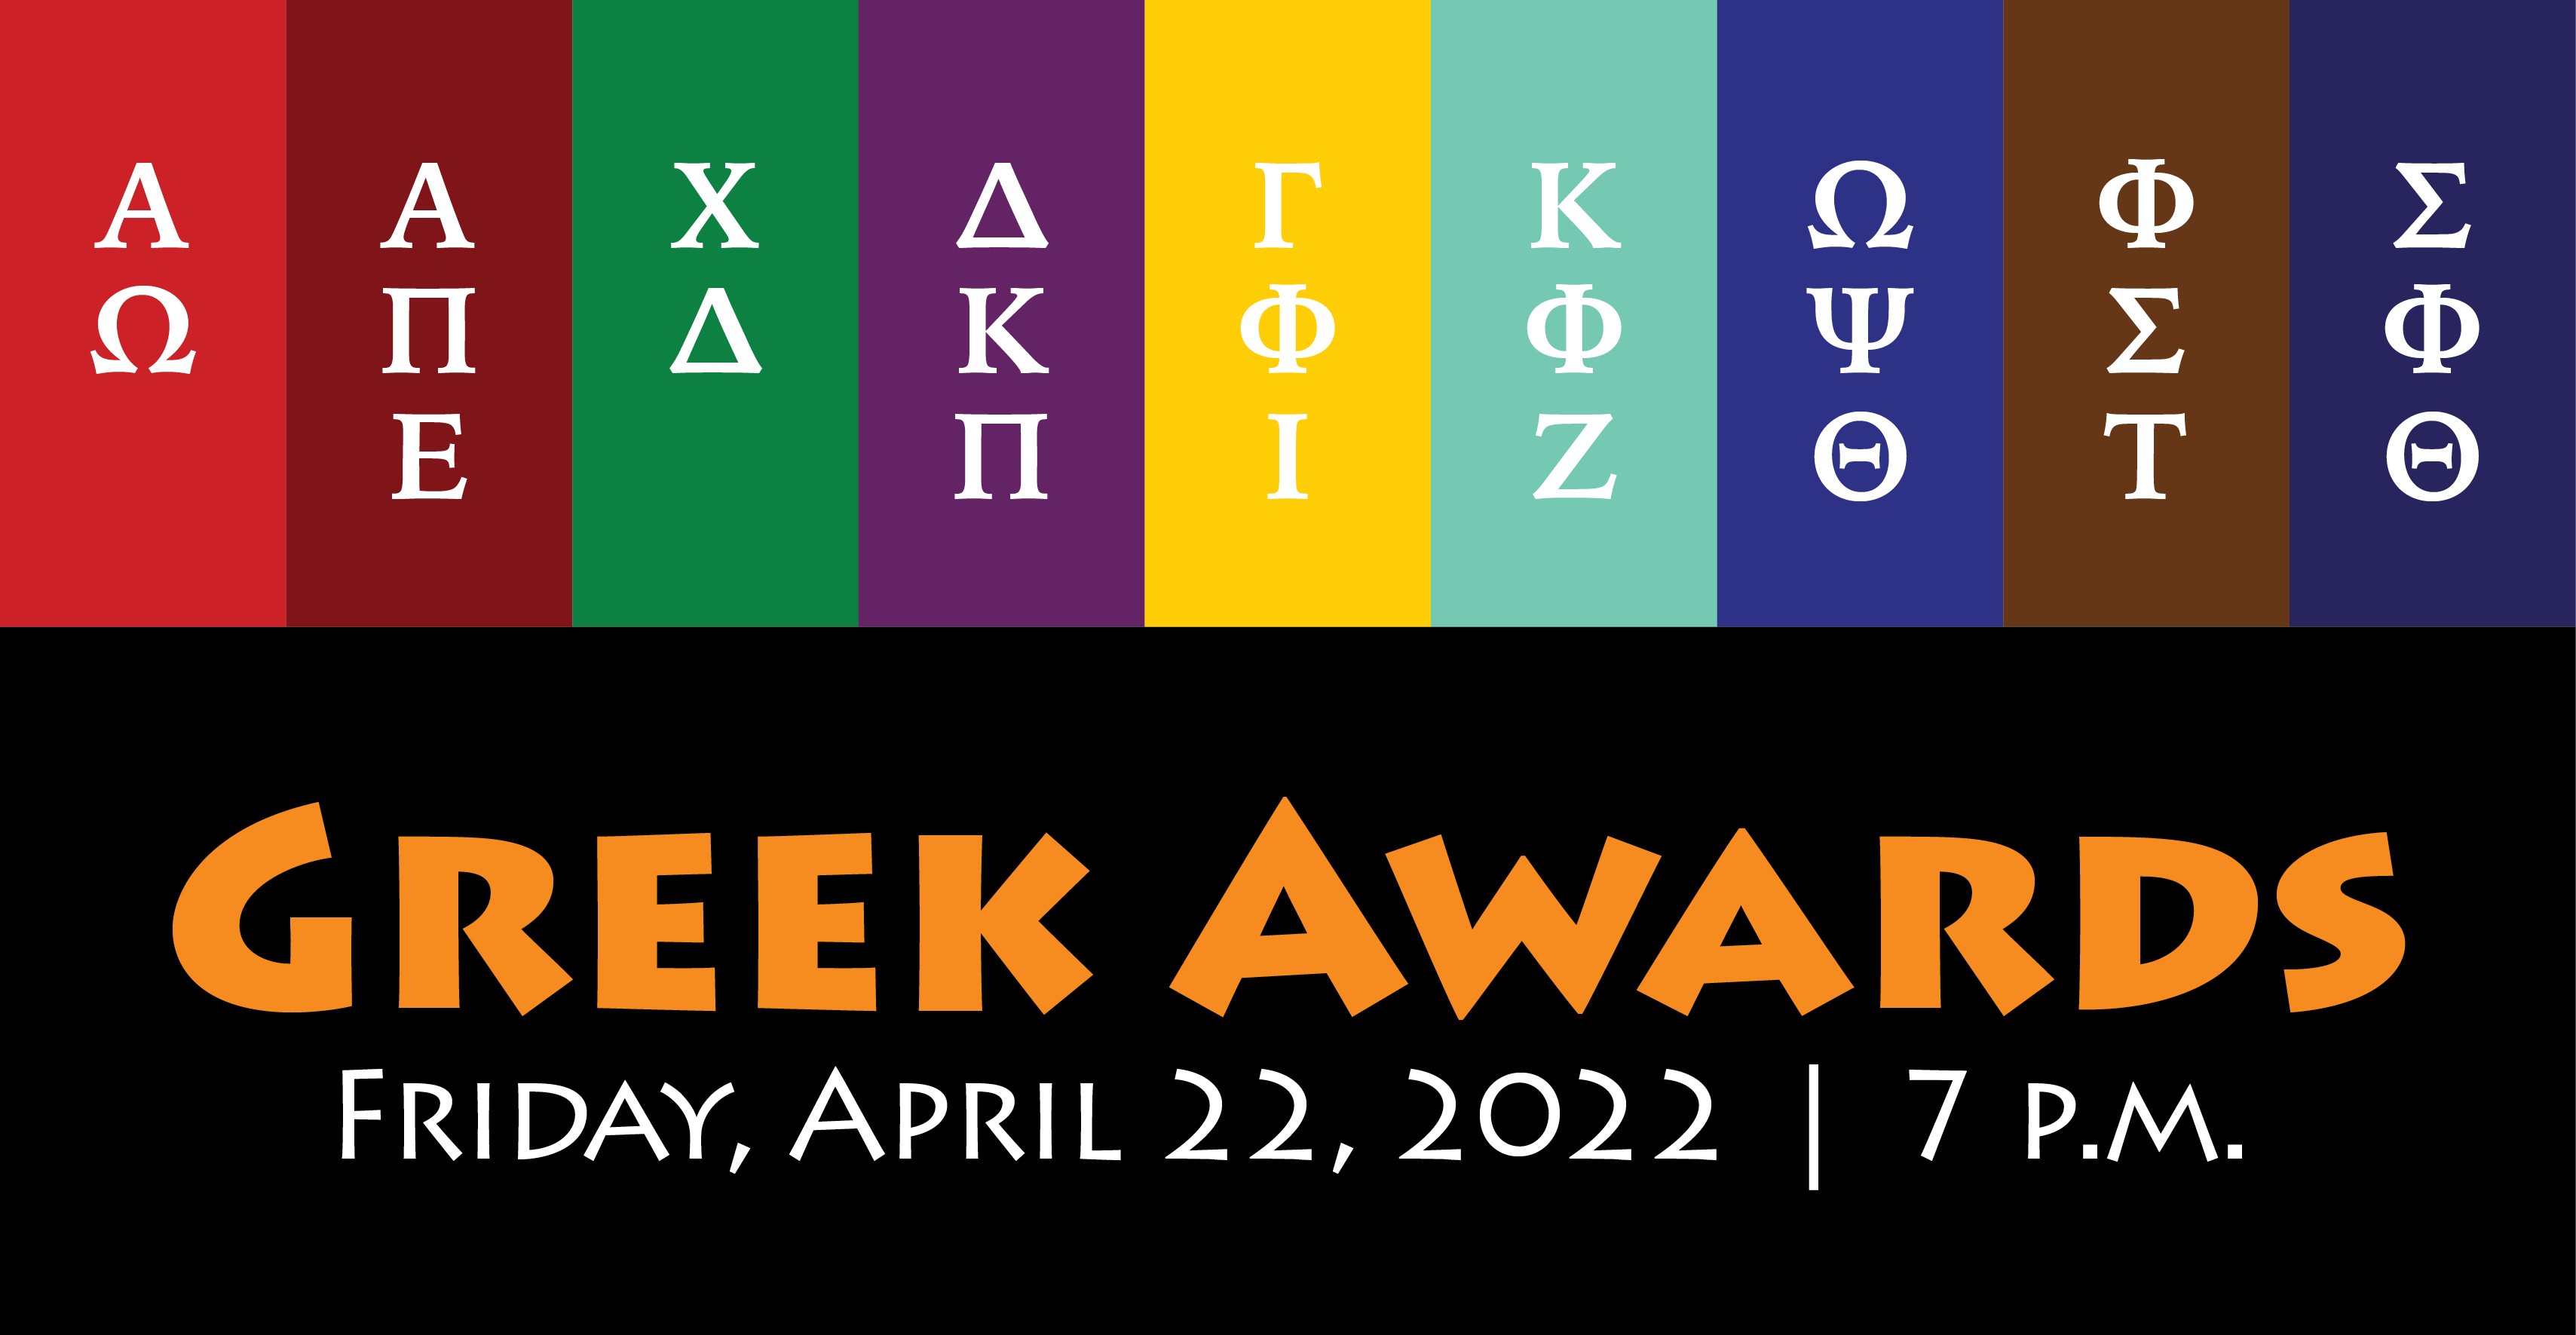 Greek Awards - Friday, April 22nd, 7 PM